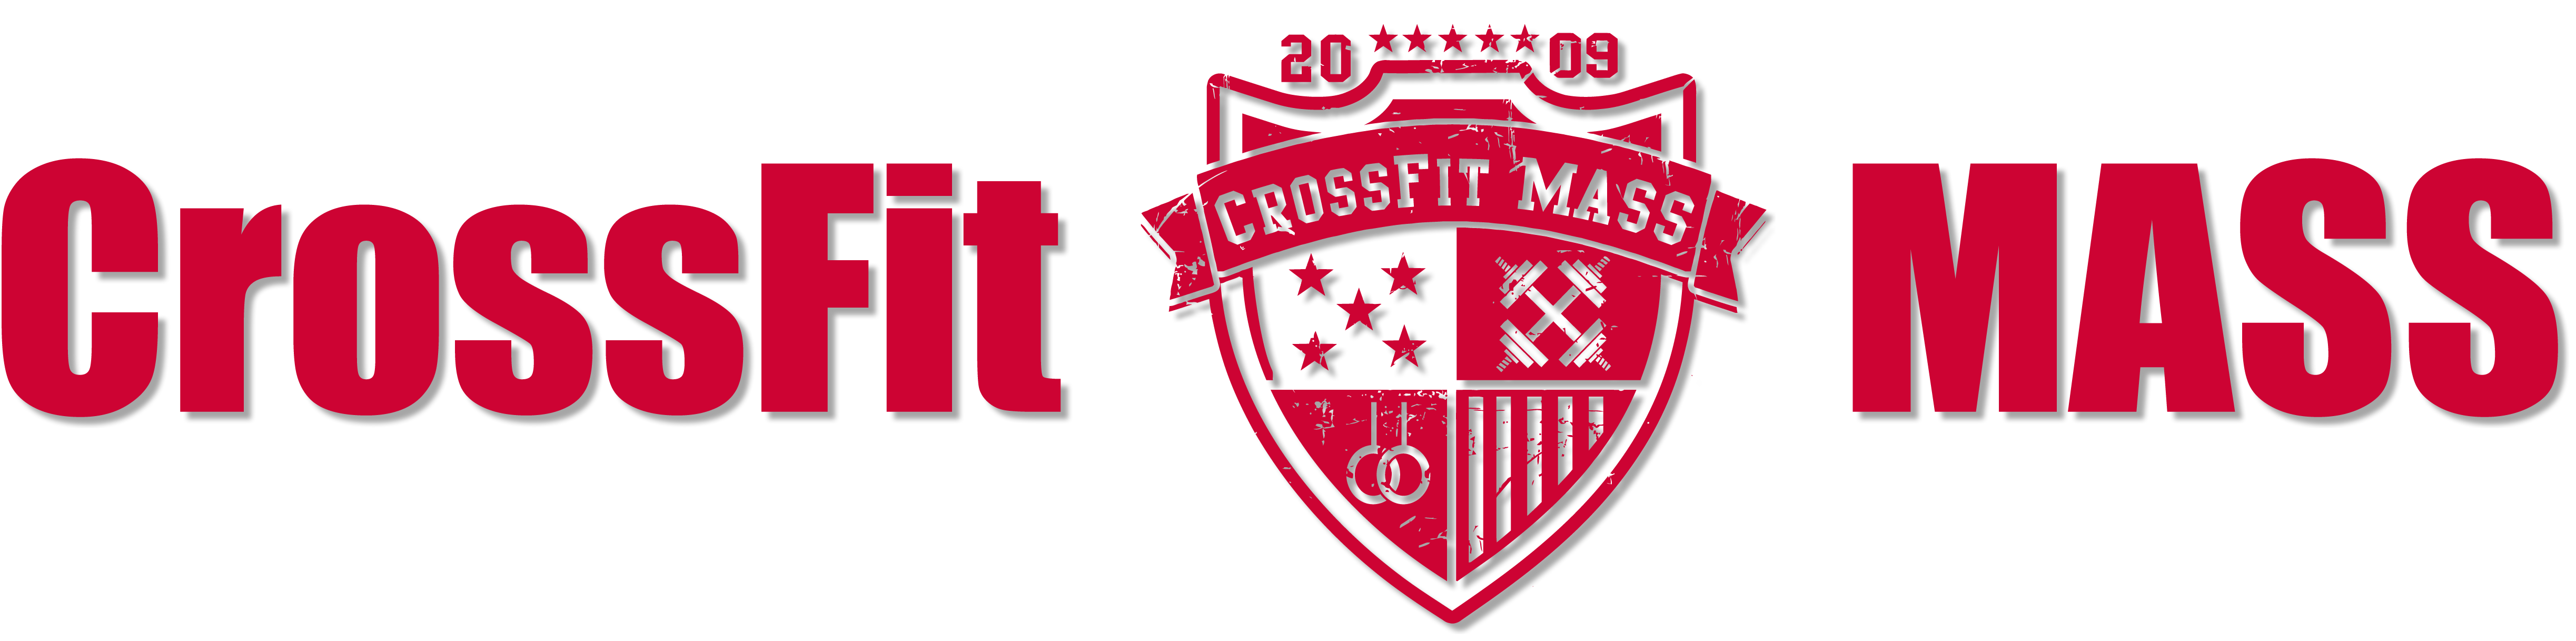 CrossFit Mass logo